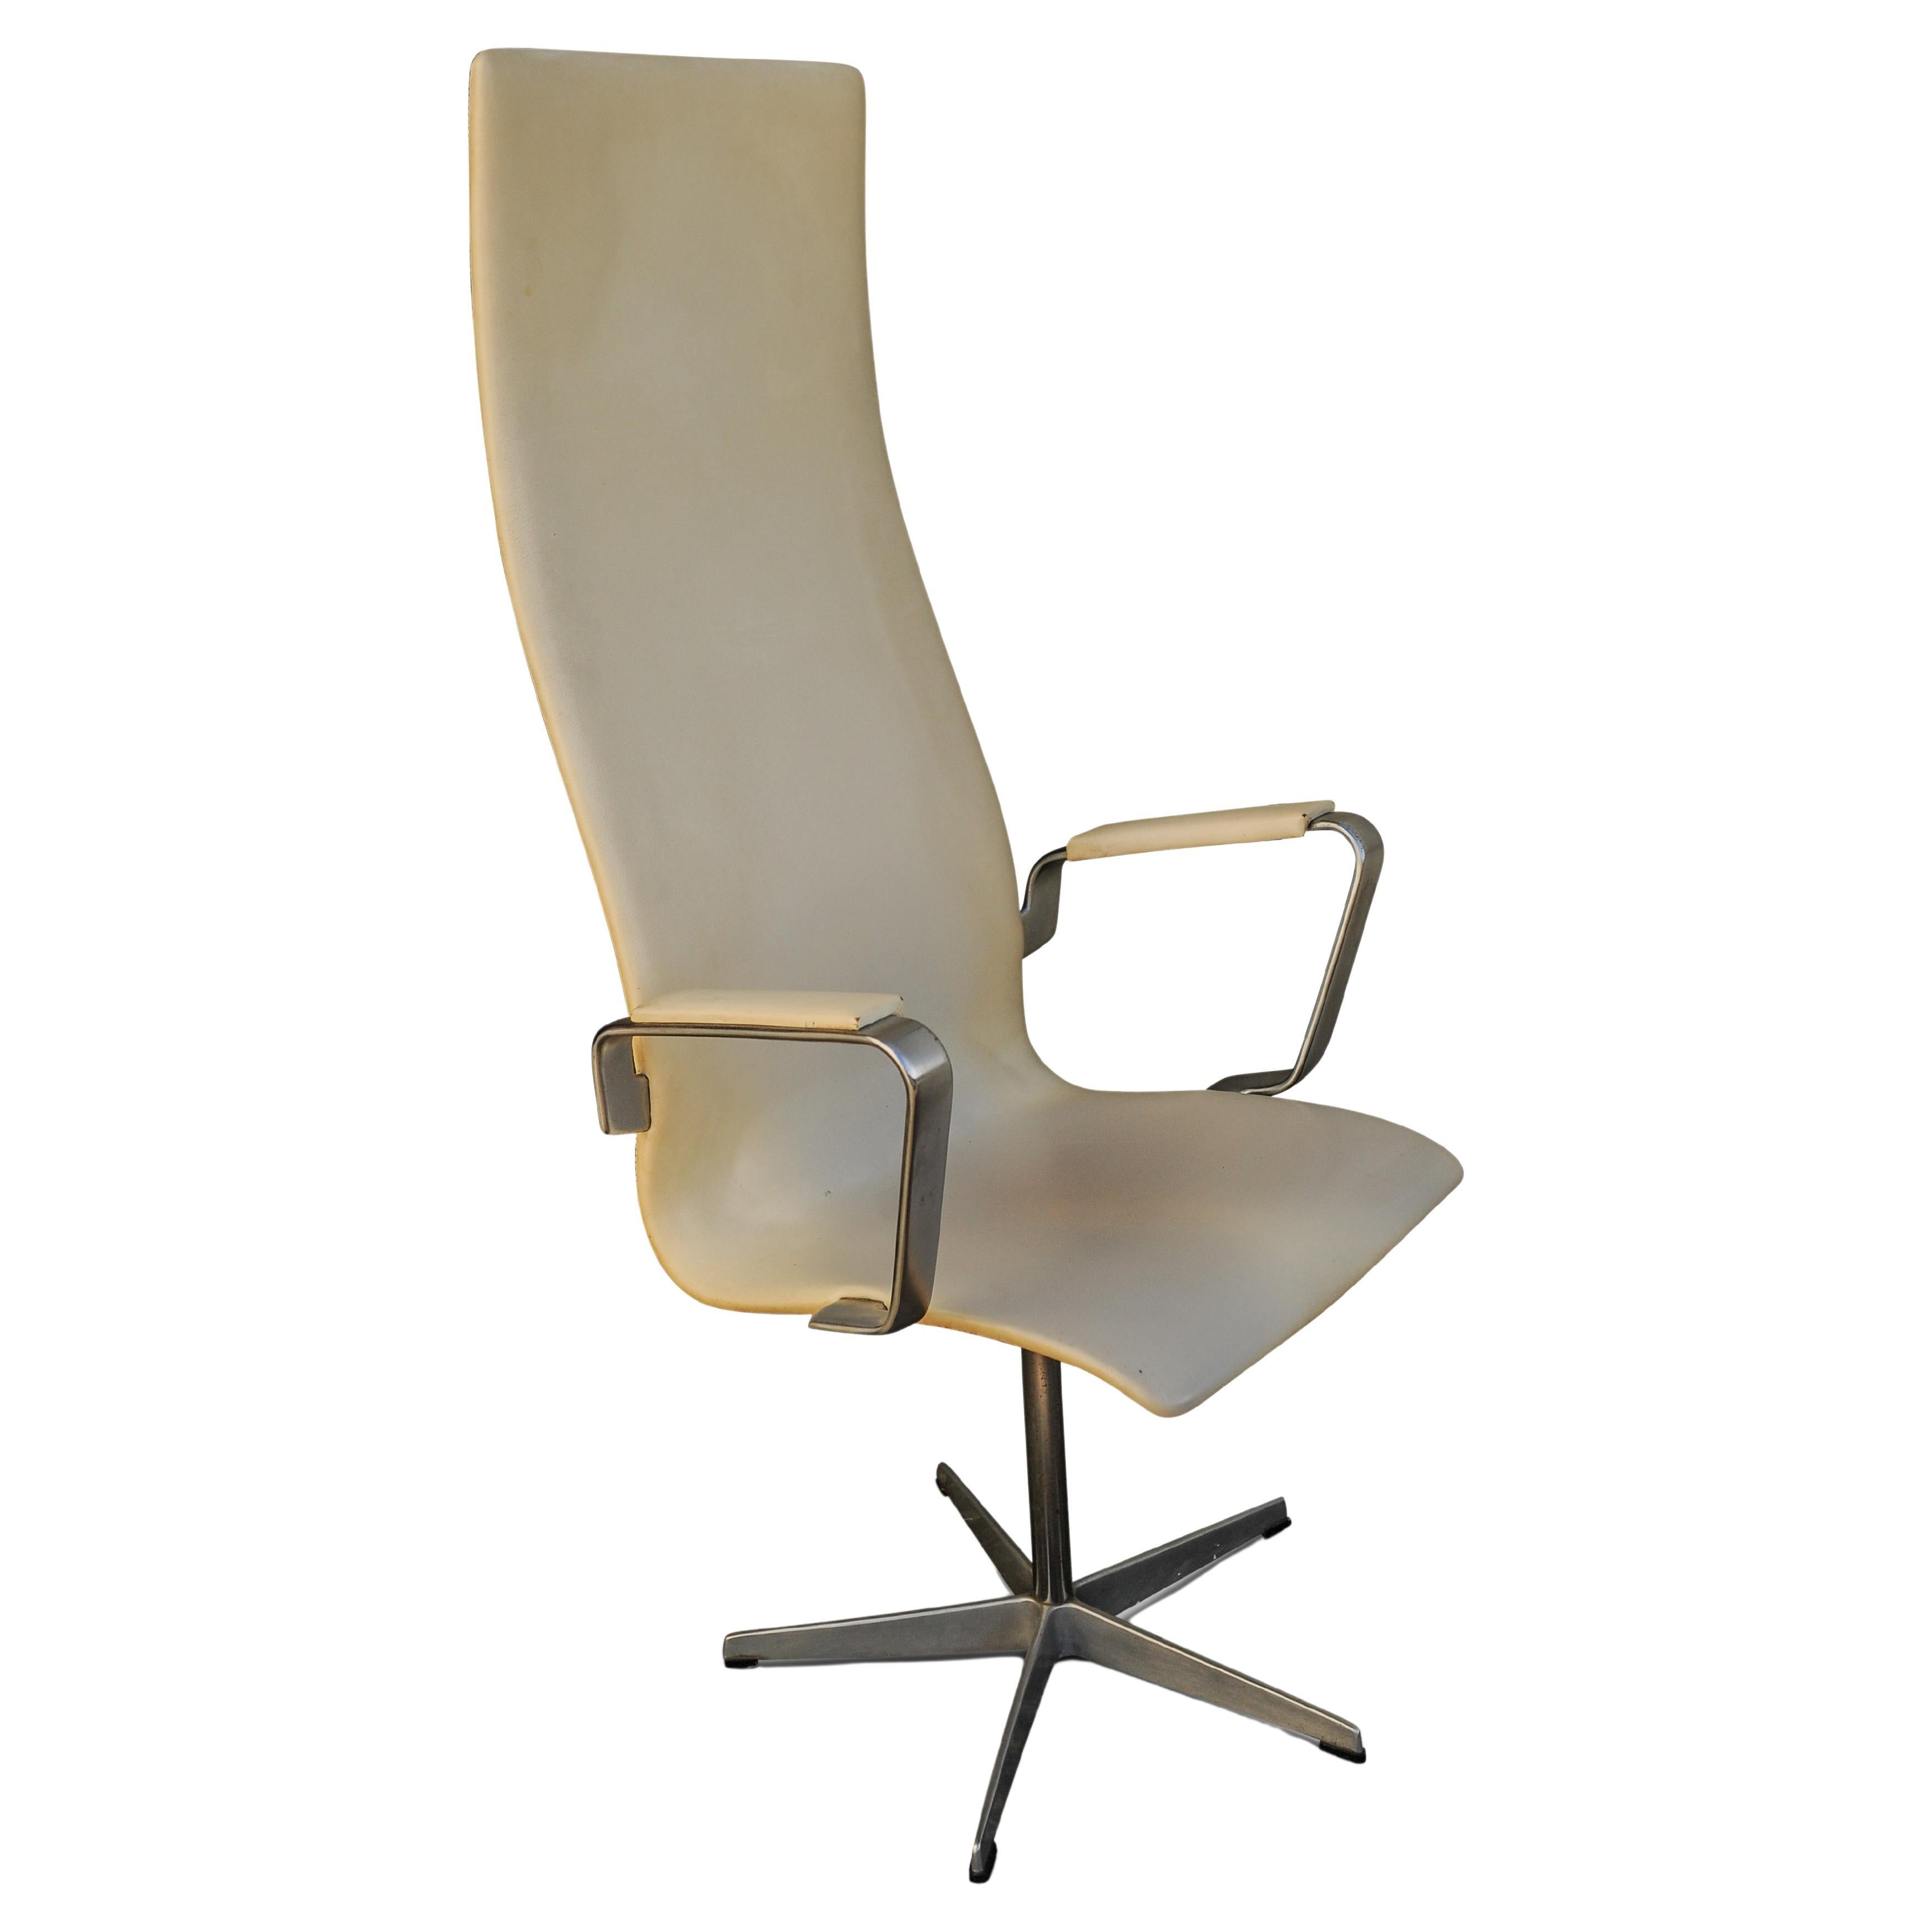 An Original Labelled Arne Jacobsen for Fritz Hansen Cream Leather "Oxford" Chair For Sale